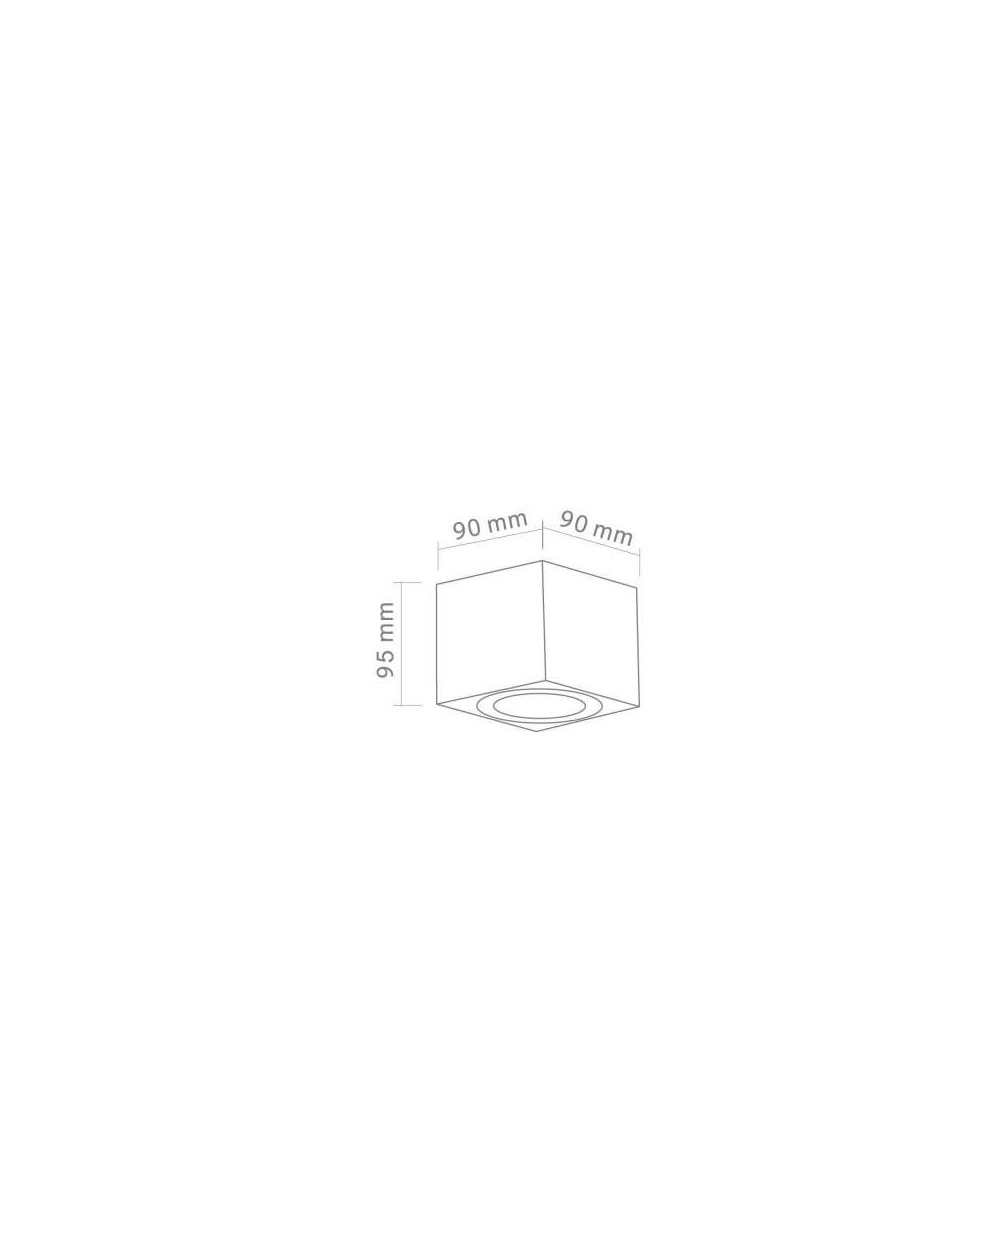 Lampa sufitowa / natynkowa Lago Bianco IP44 - Orlicki Design biała, kwadratowa do łazienki i kuchni